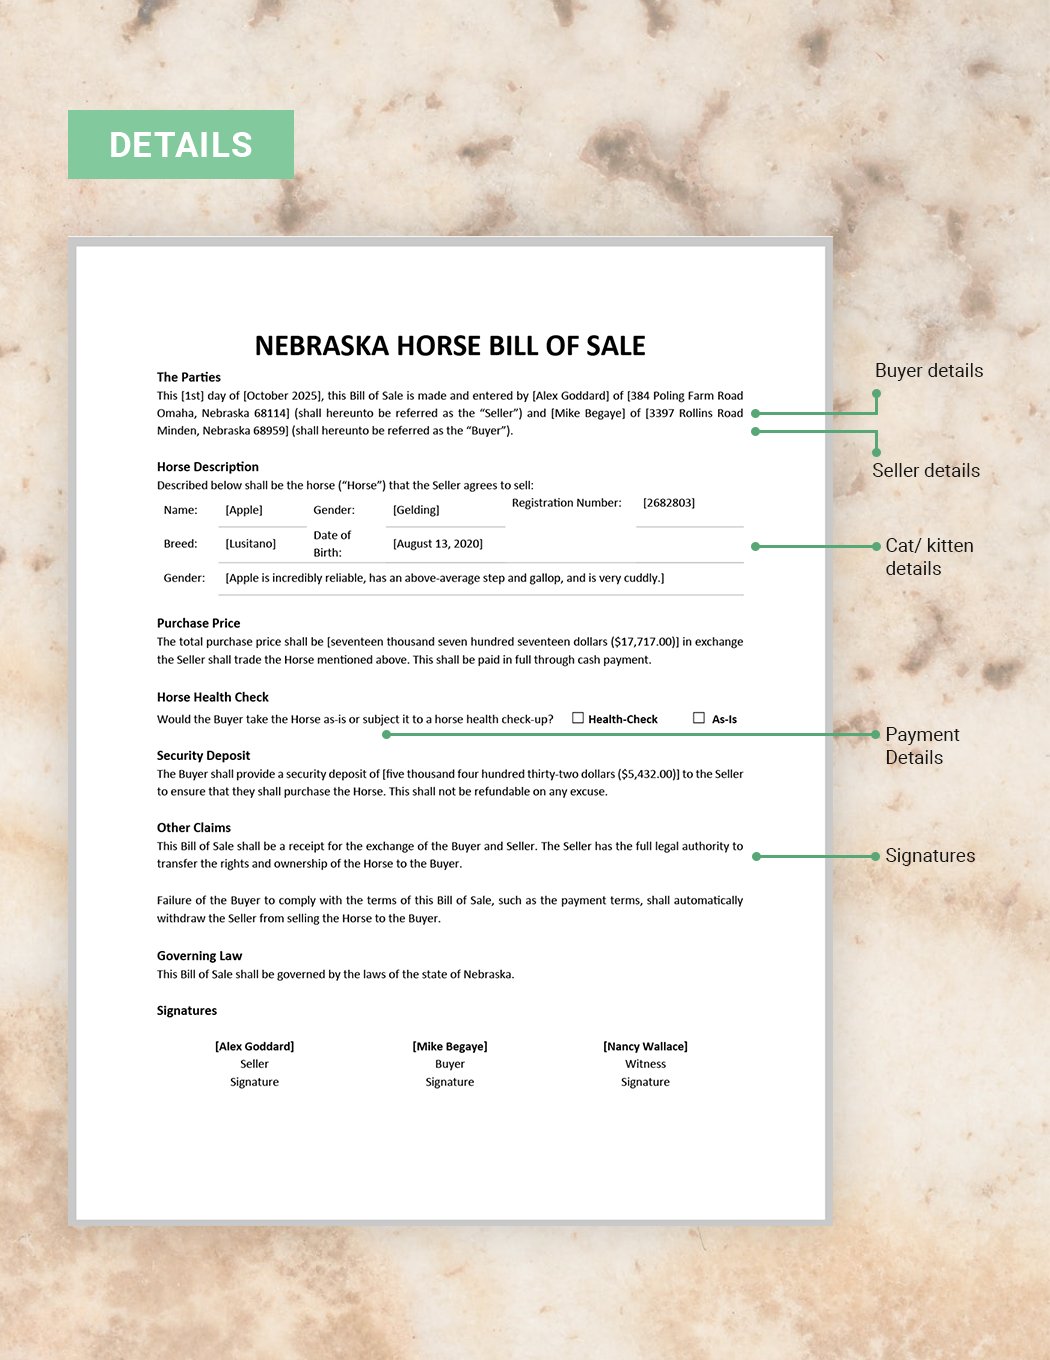 Nebraska Horse Bill of Sale Form Template